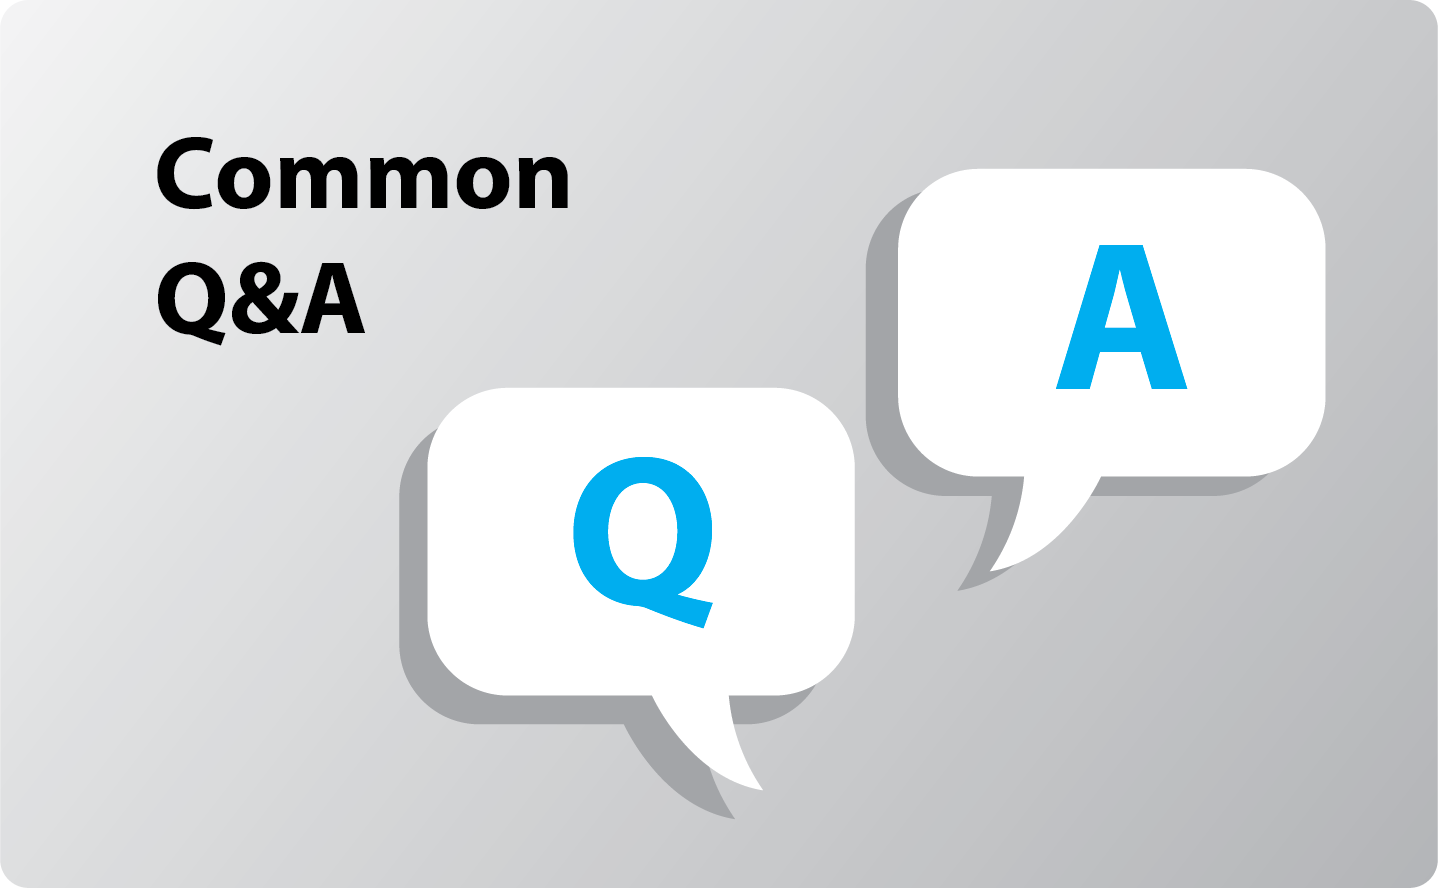 Common Q&A